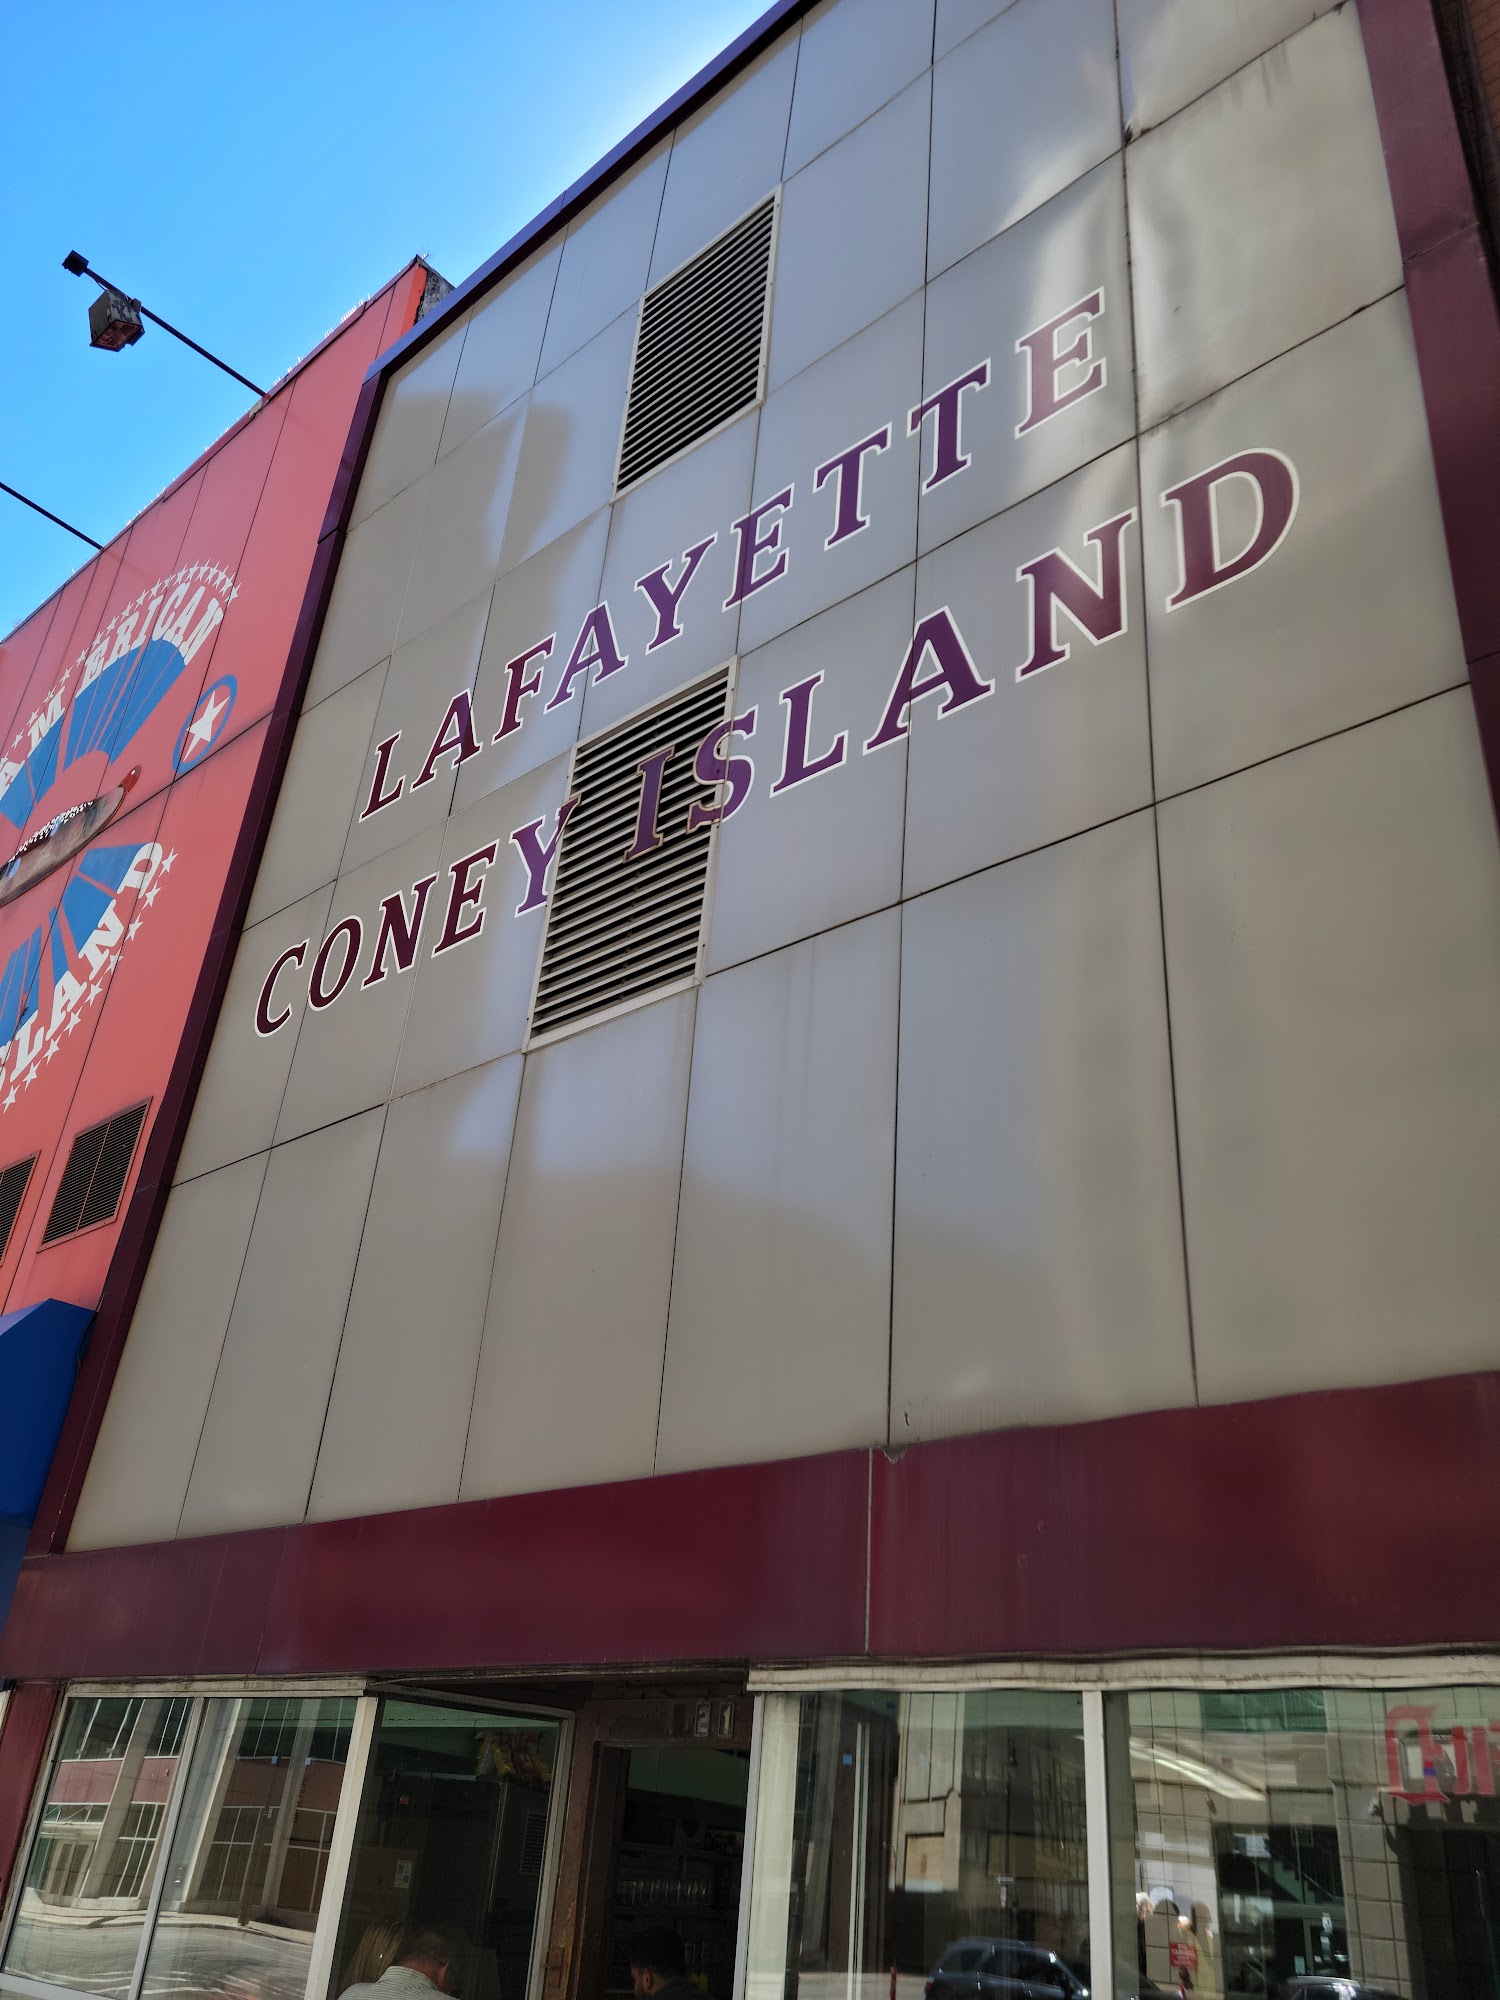 Lafayette Coney Island